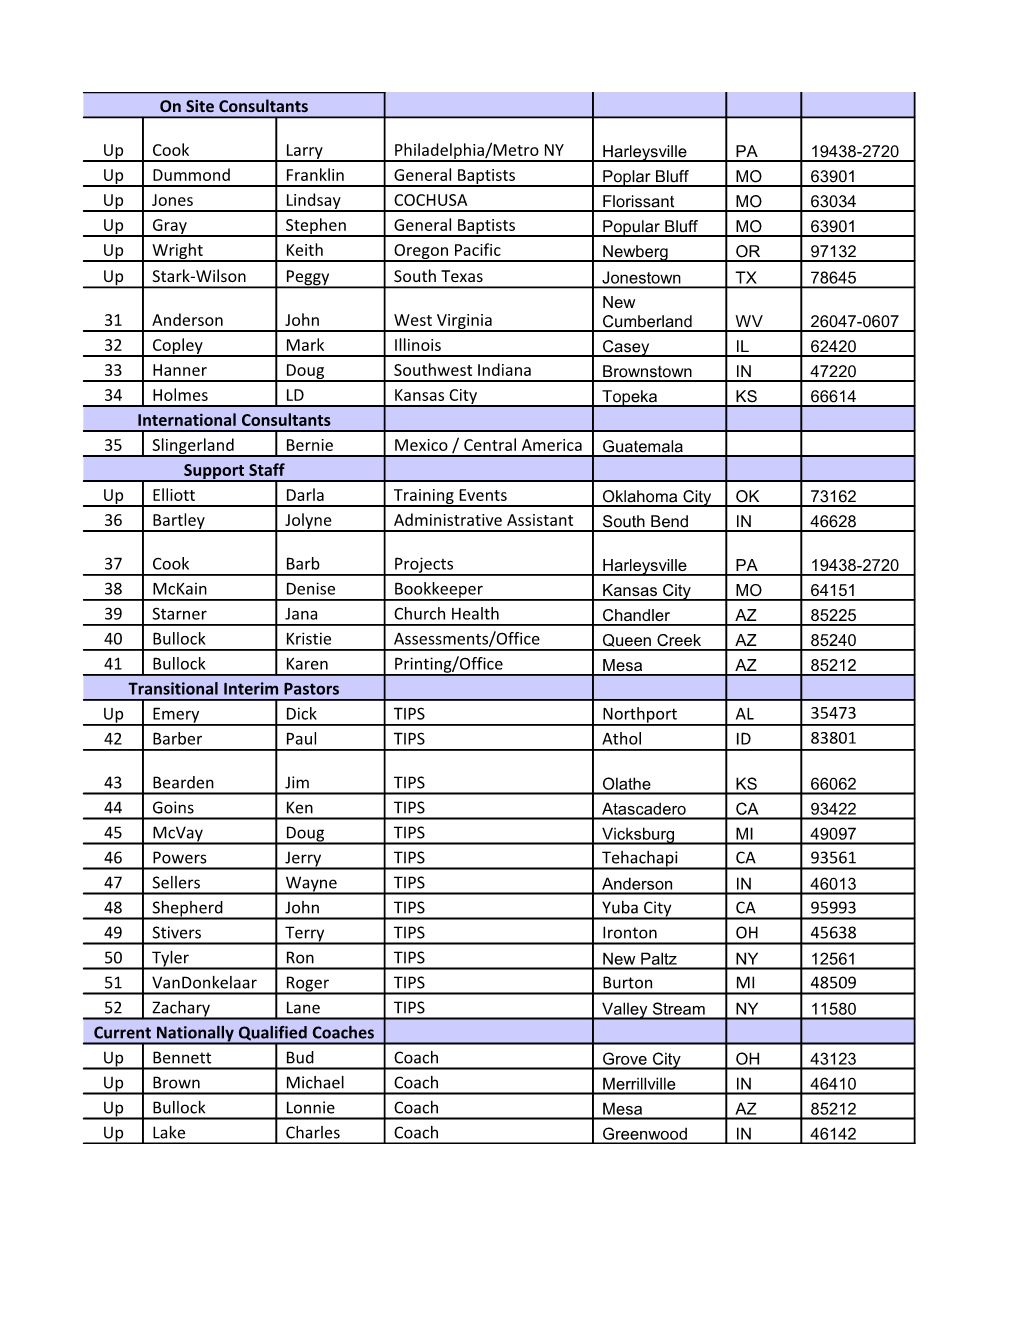 NCS Personnel List December, 2008